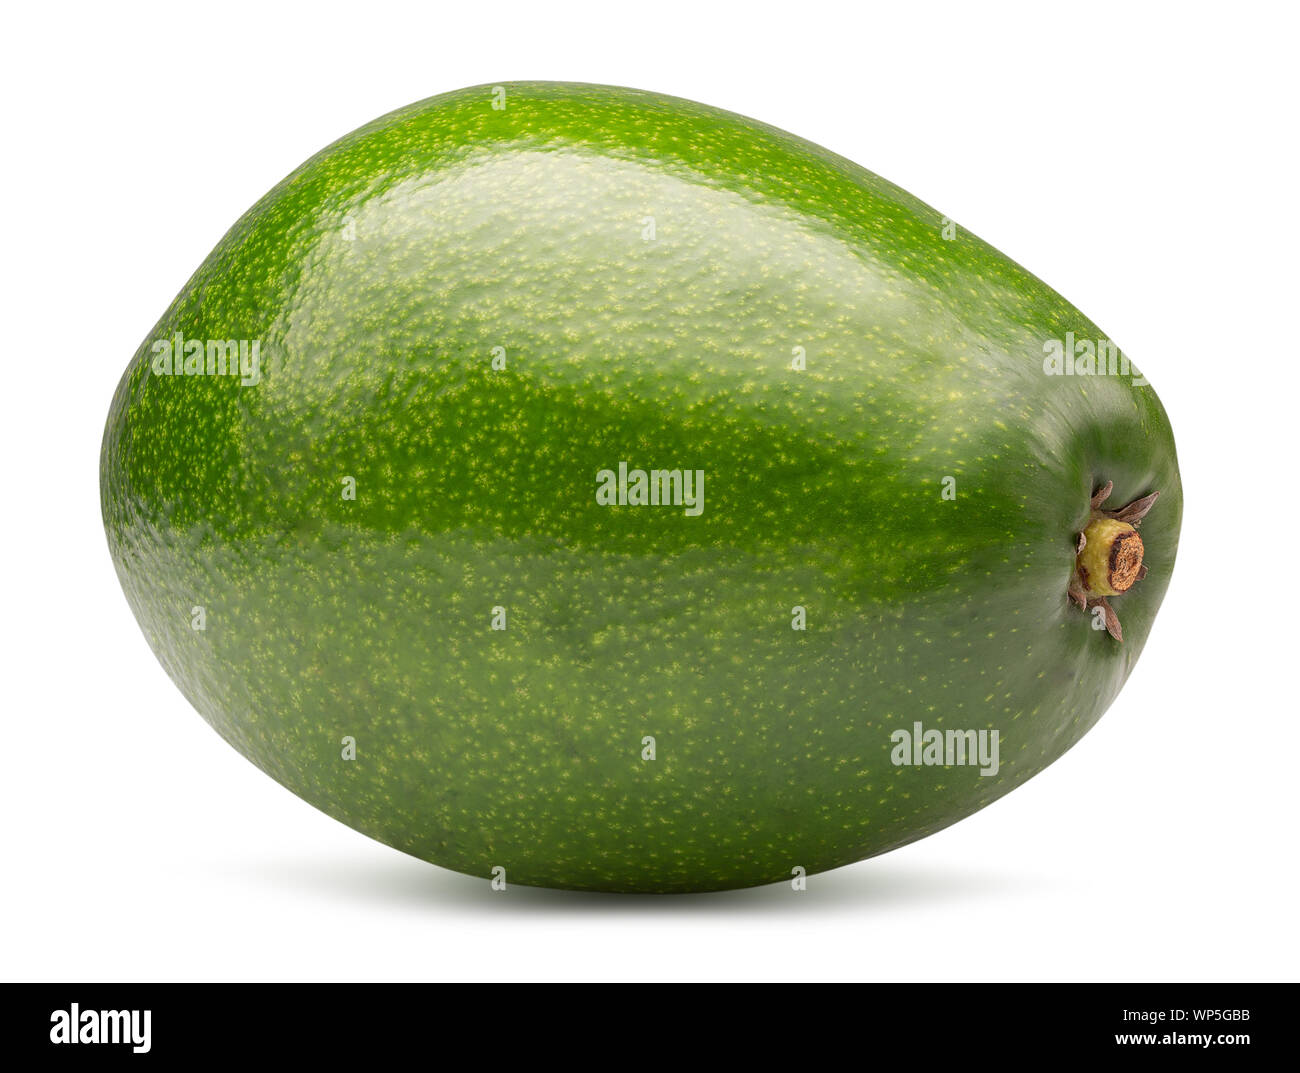 avocado isolated on a white background. Stock Photo